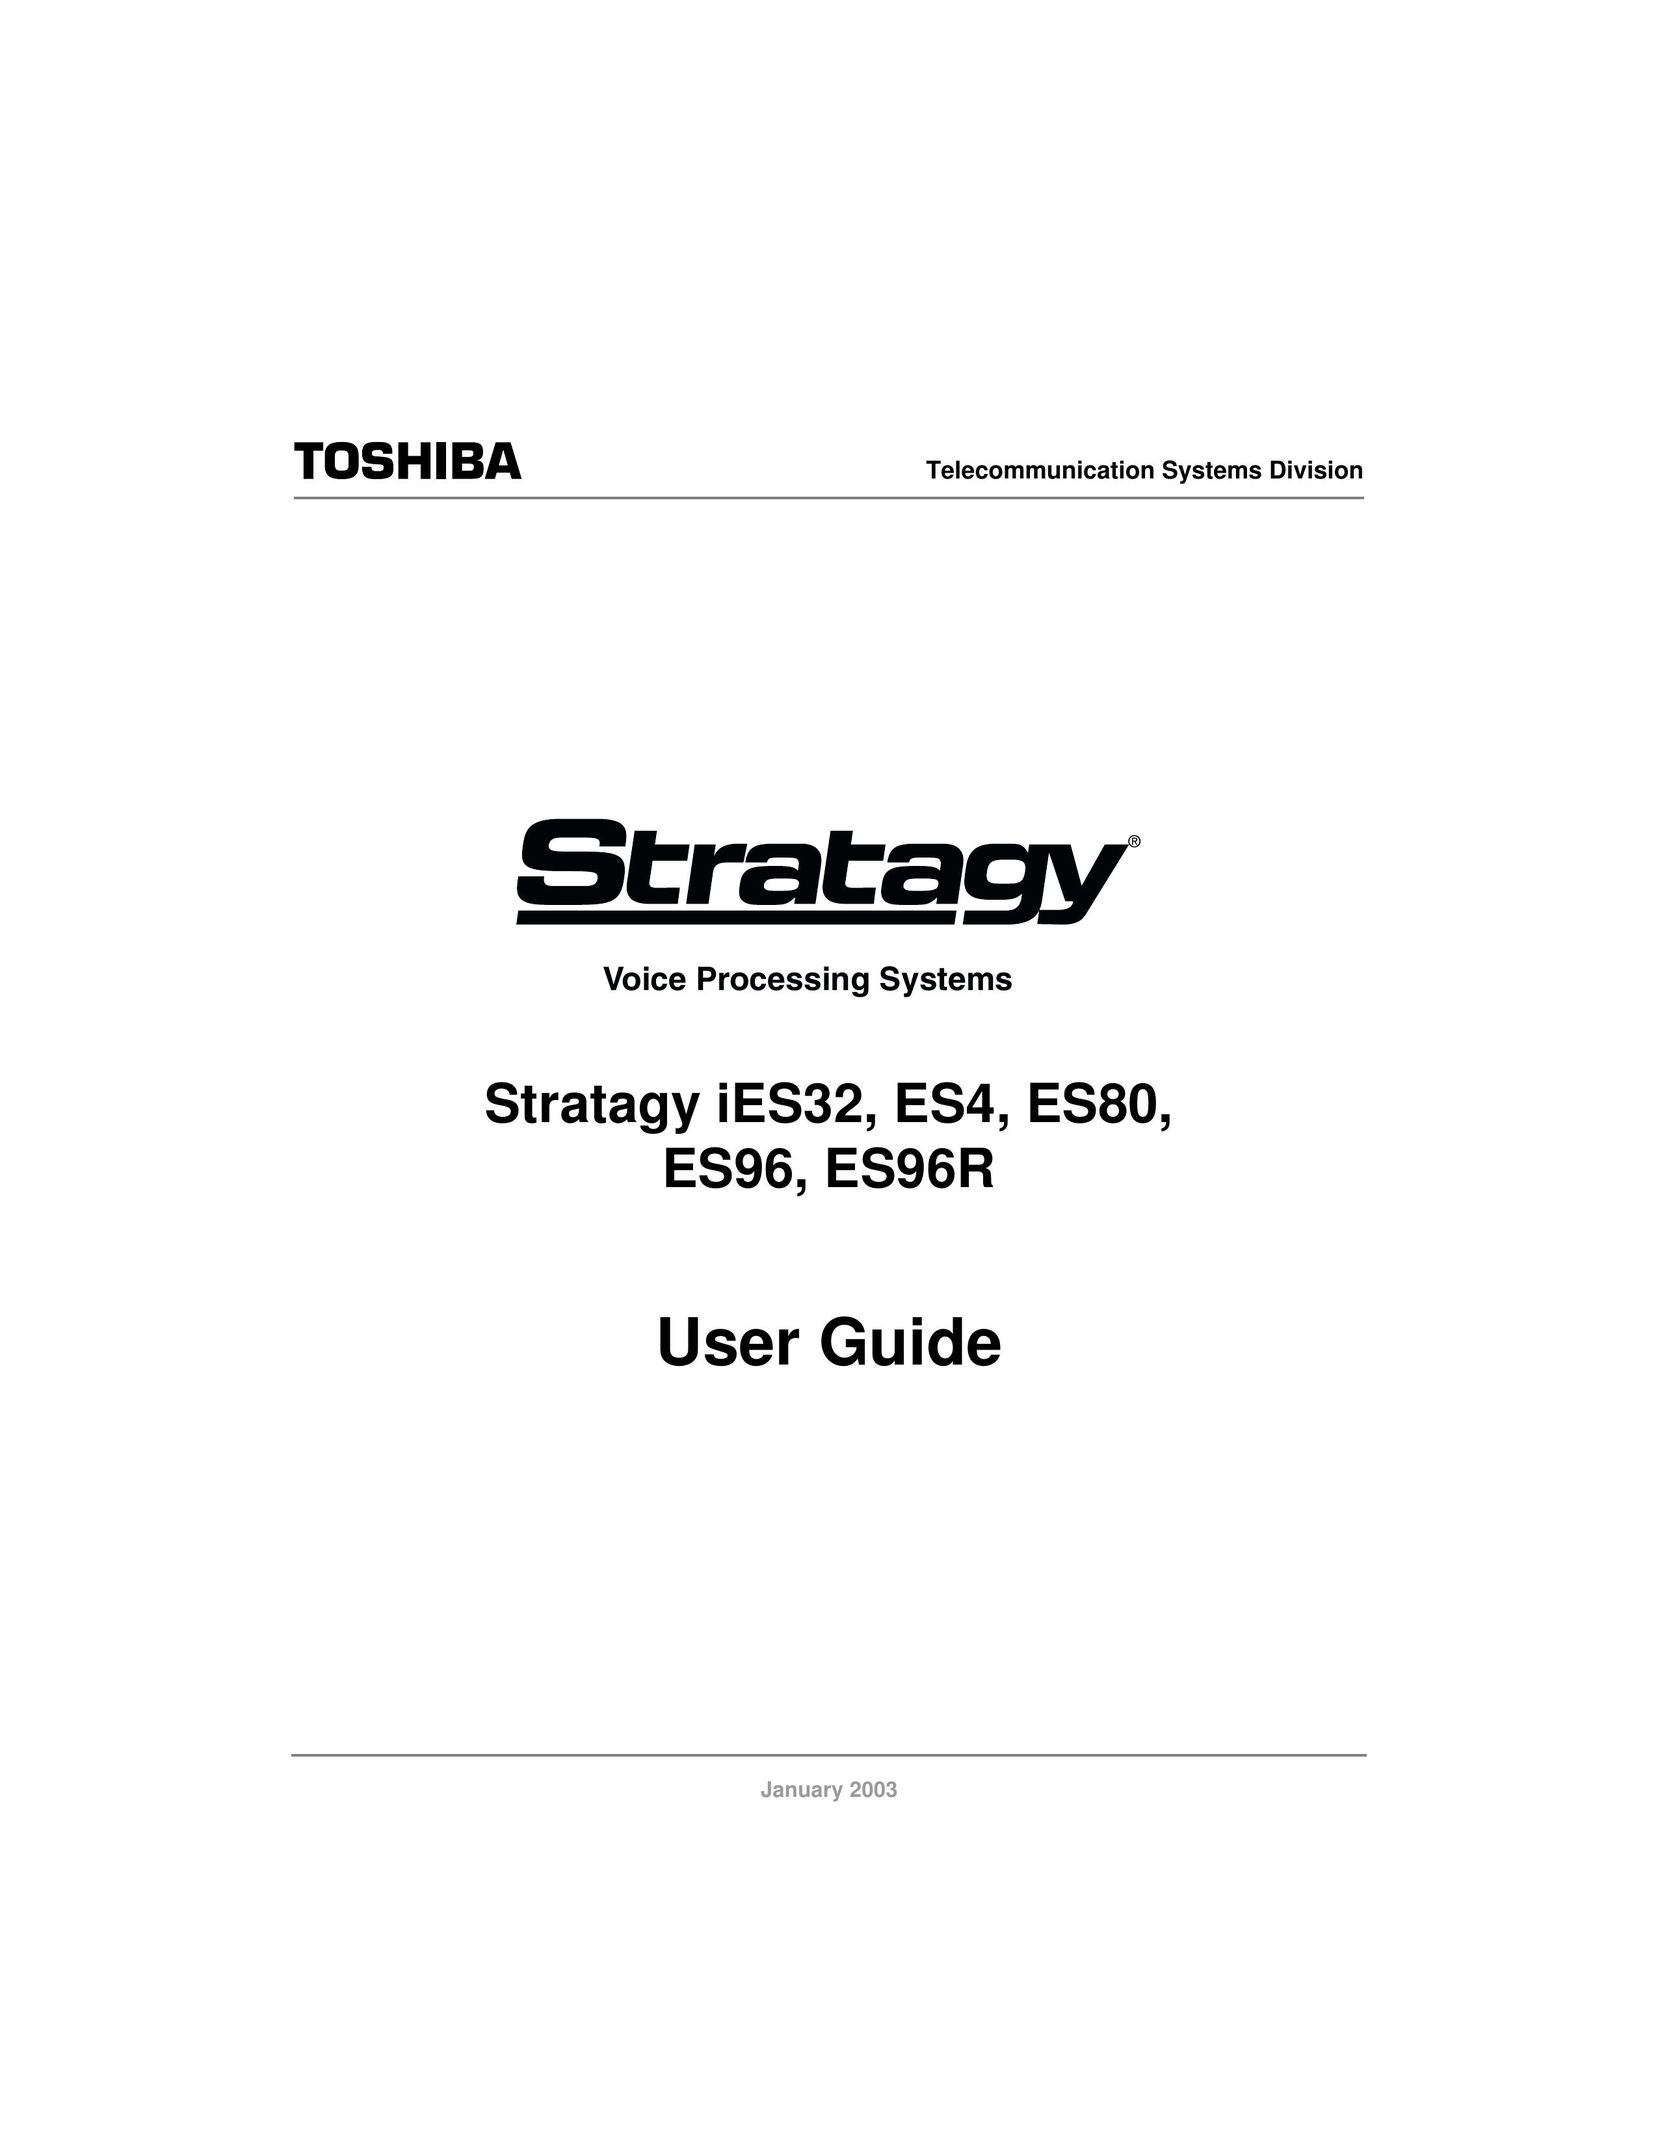 Toshiba ES80 Answering Machine User Manual